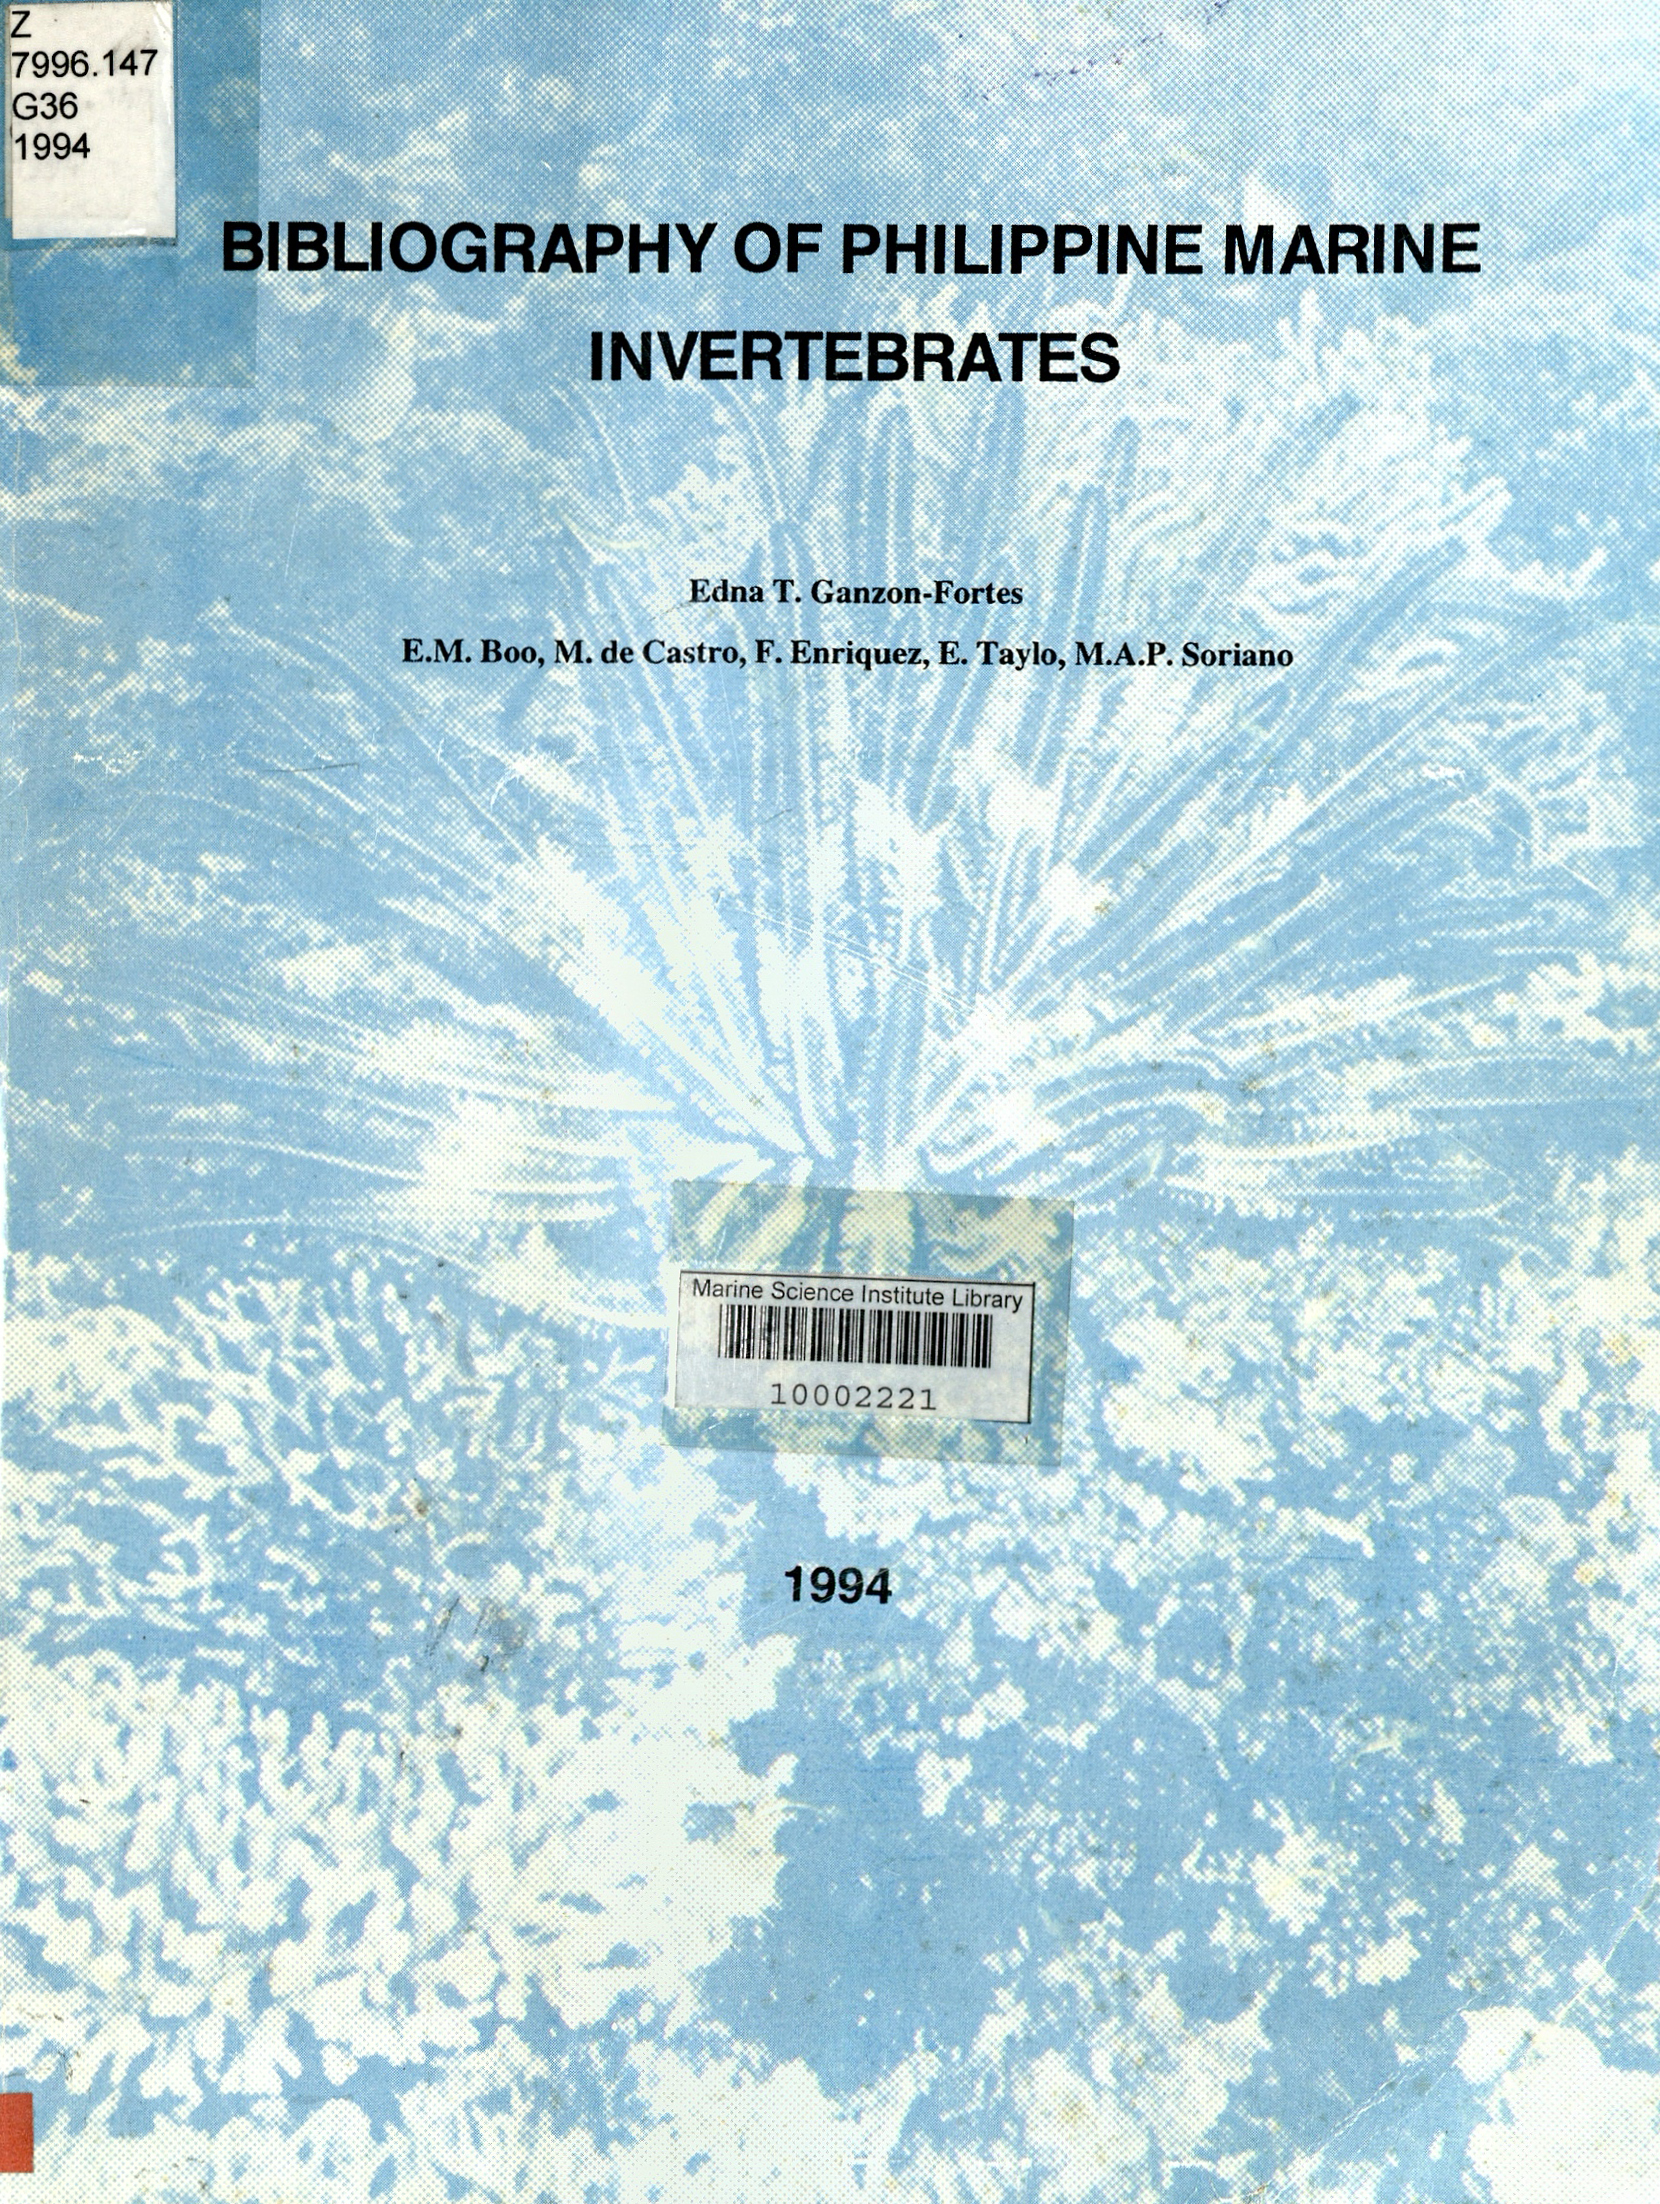 Bibliography of Philippine marine invertebrates